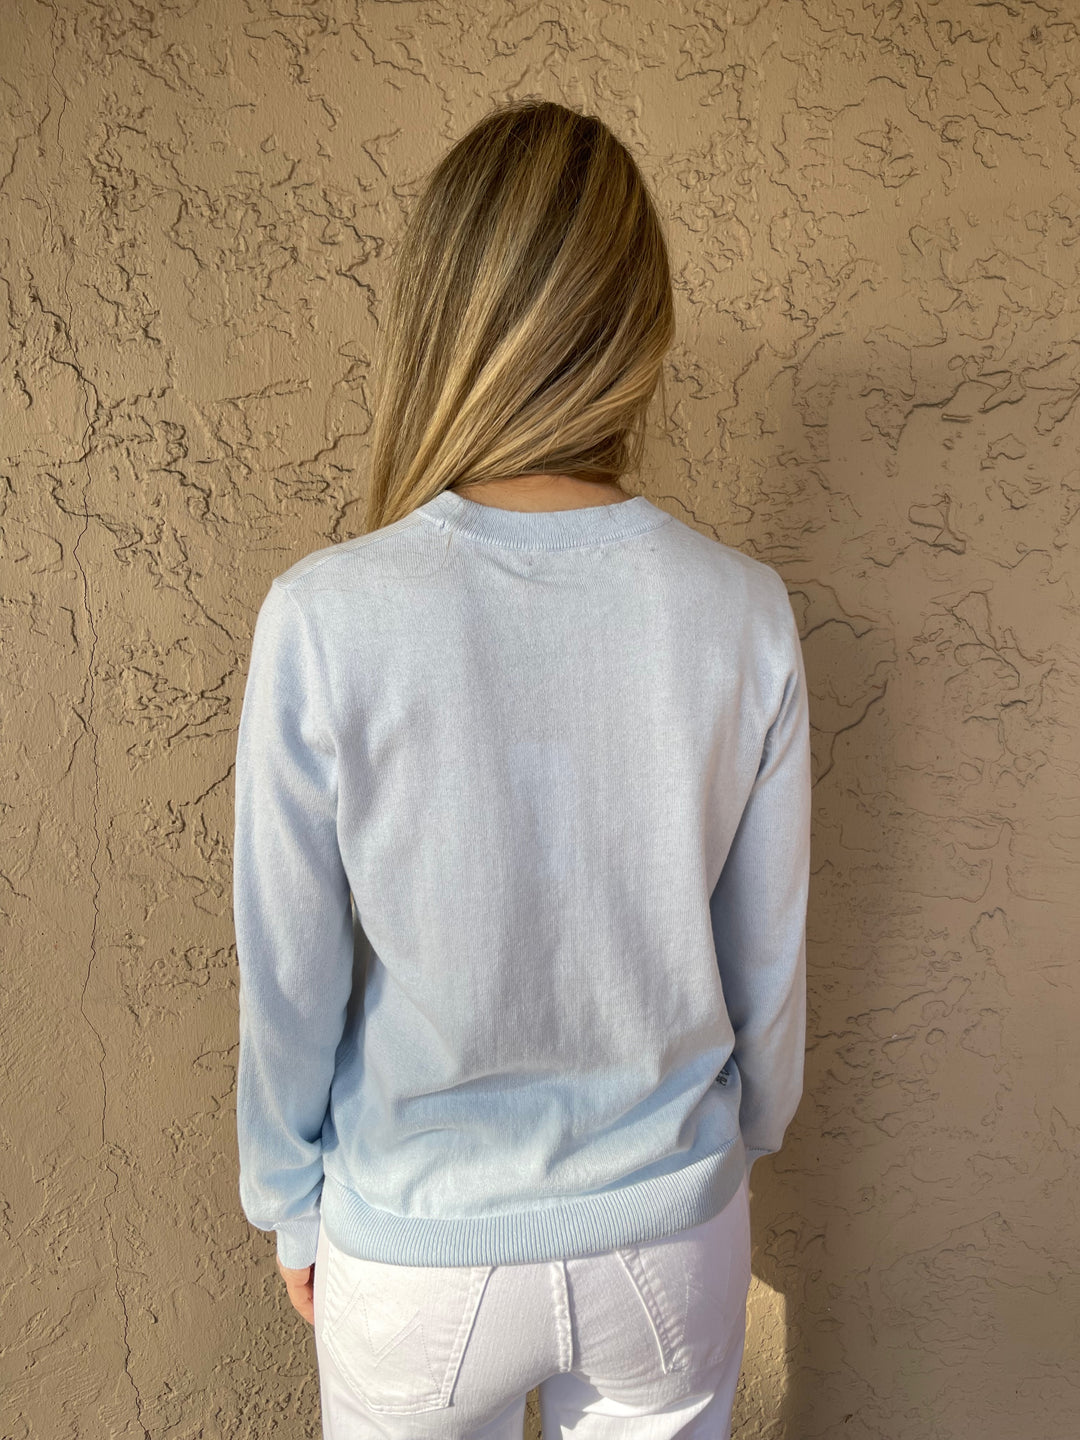 Barbara Katz Sweater Collection Westie Pullover Sweater